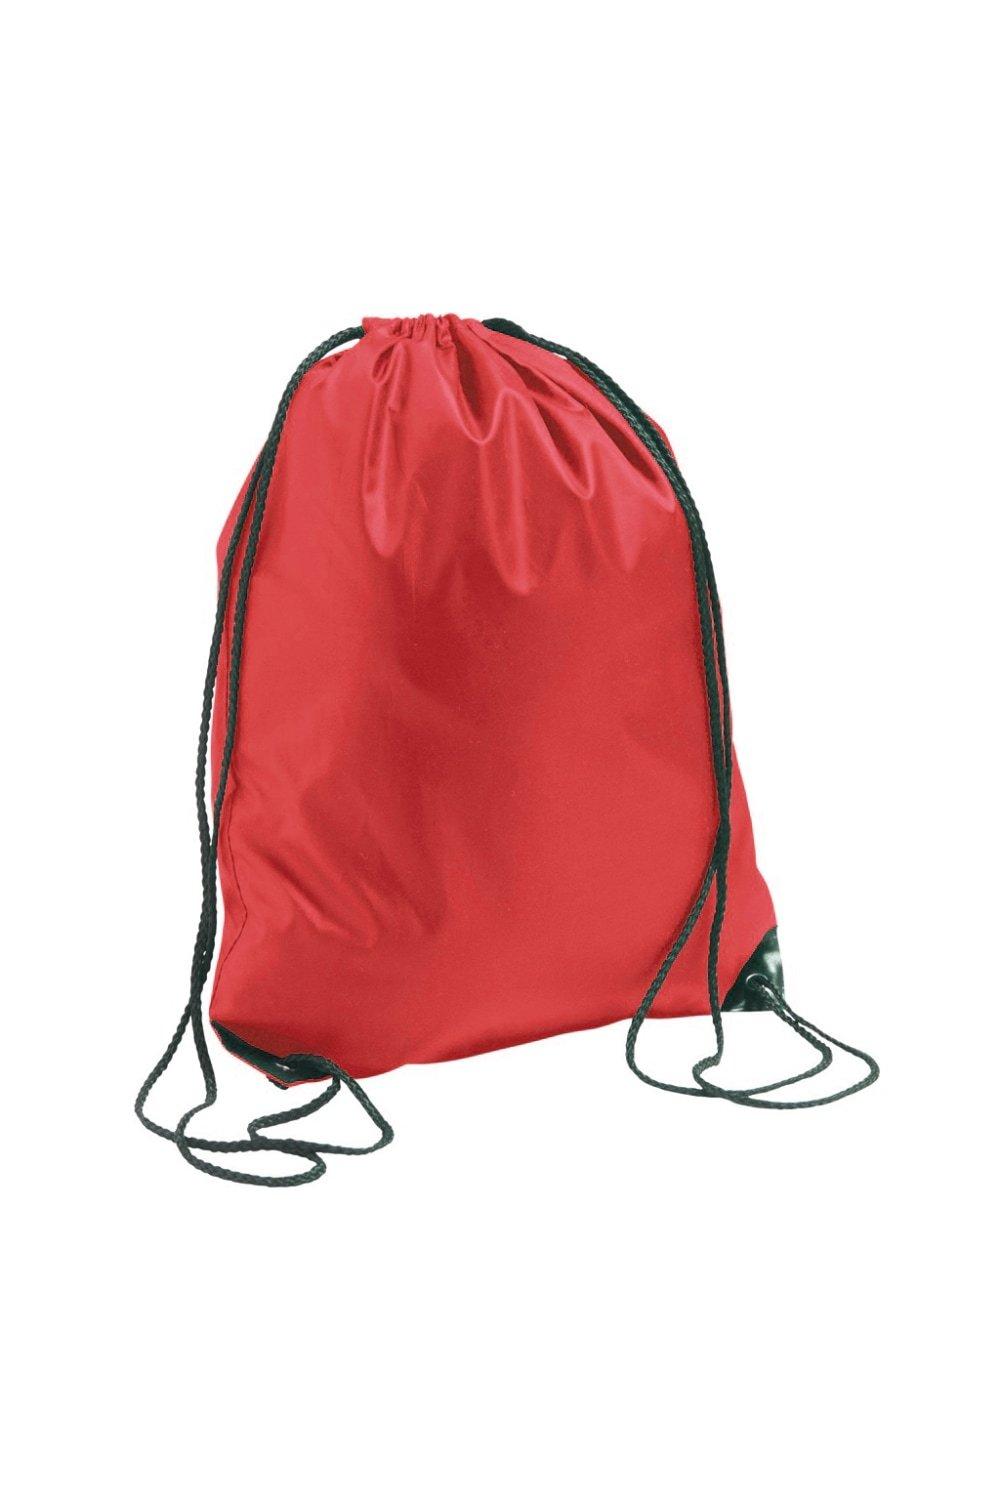 Сумка Urban Gymsac на шнурке SOL'S, красный сумка urban gymsac на шнурке sol s розовый